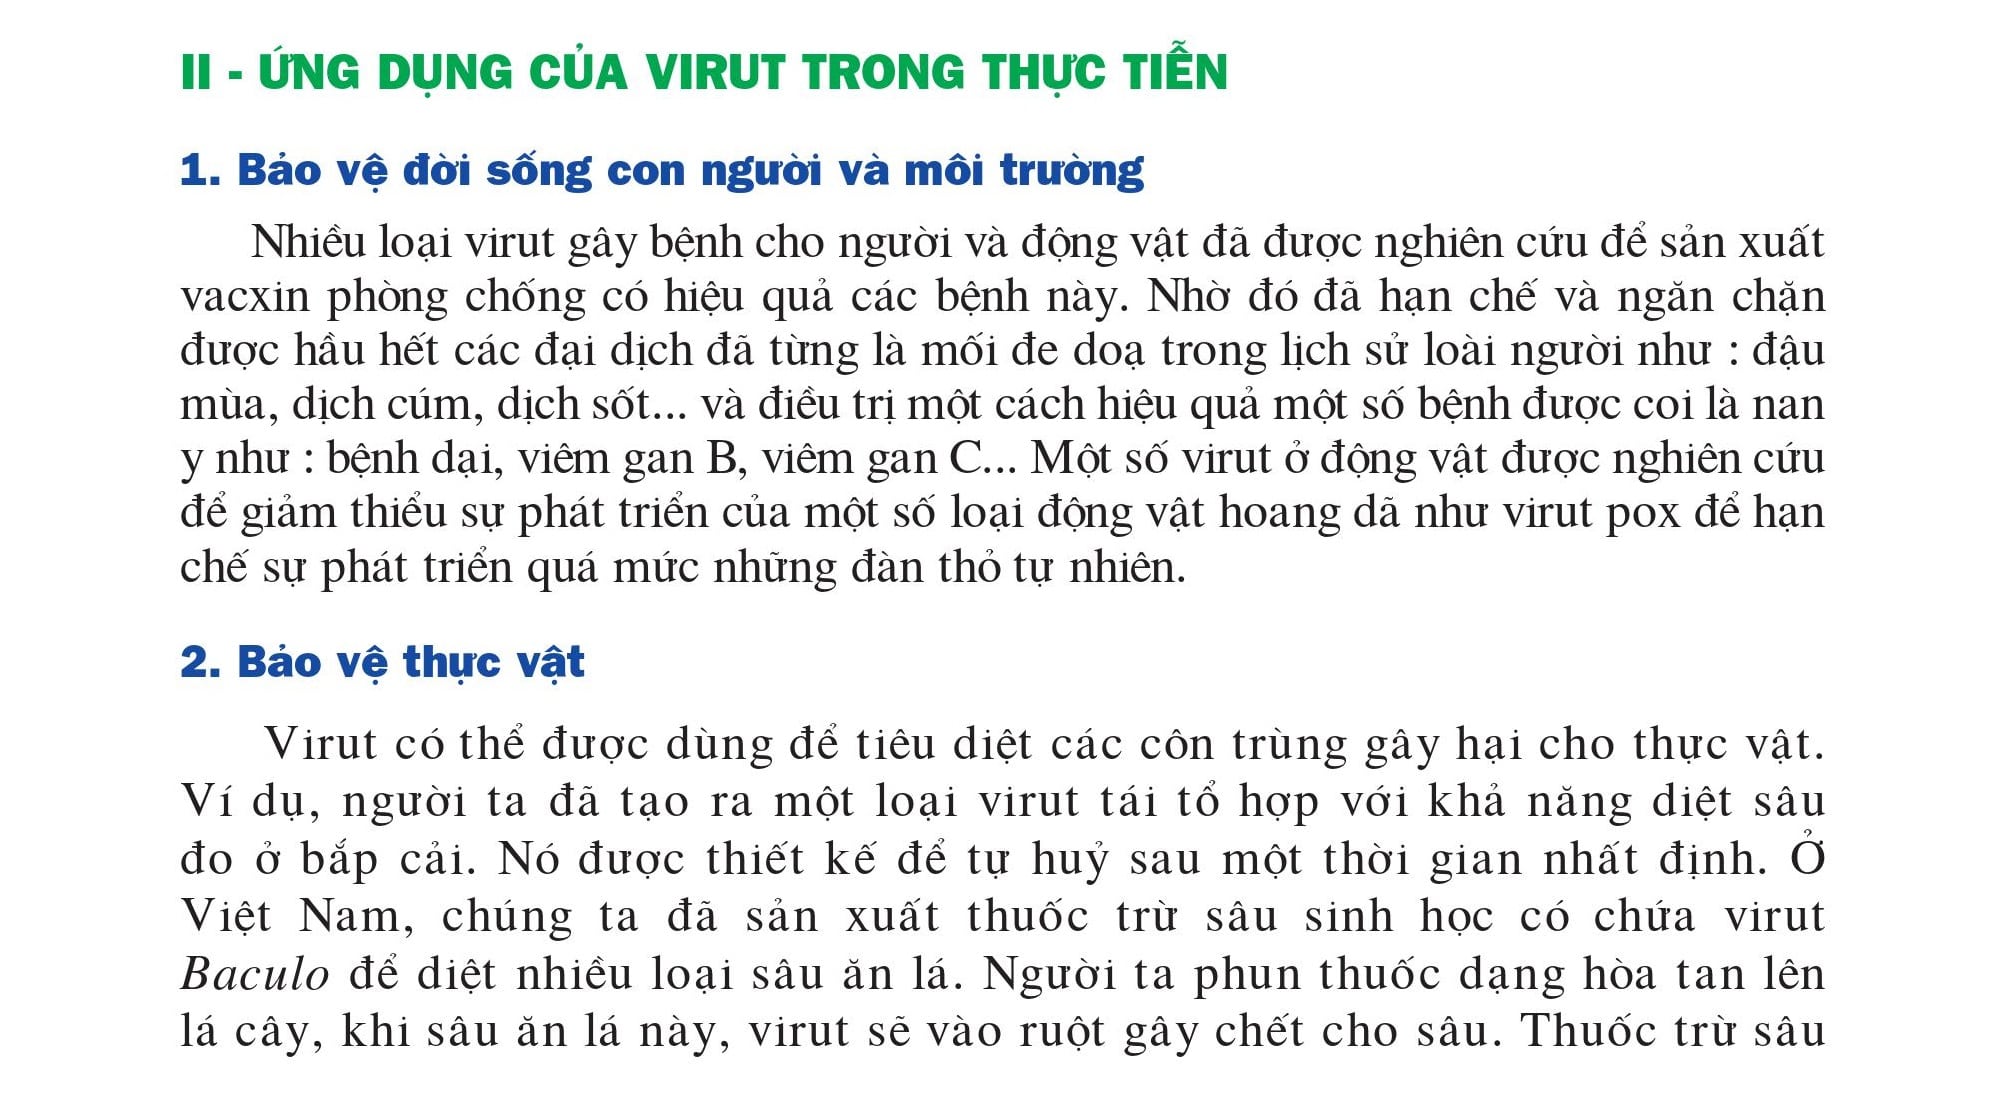 Ứng dụng của virut trong thực tiễn - https://vh2.com.vn - Networks Business Online Việt Nam & International VH2